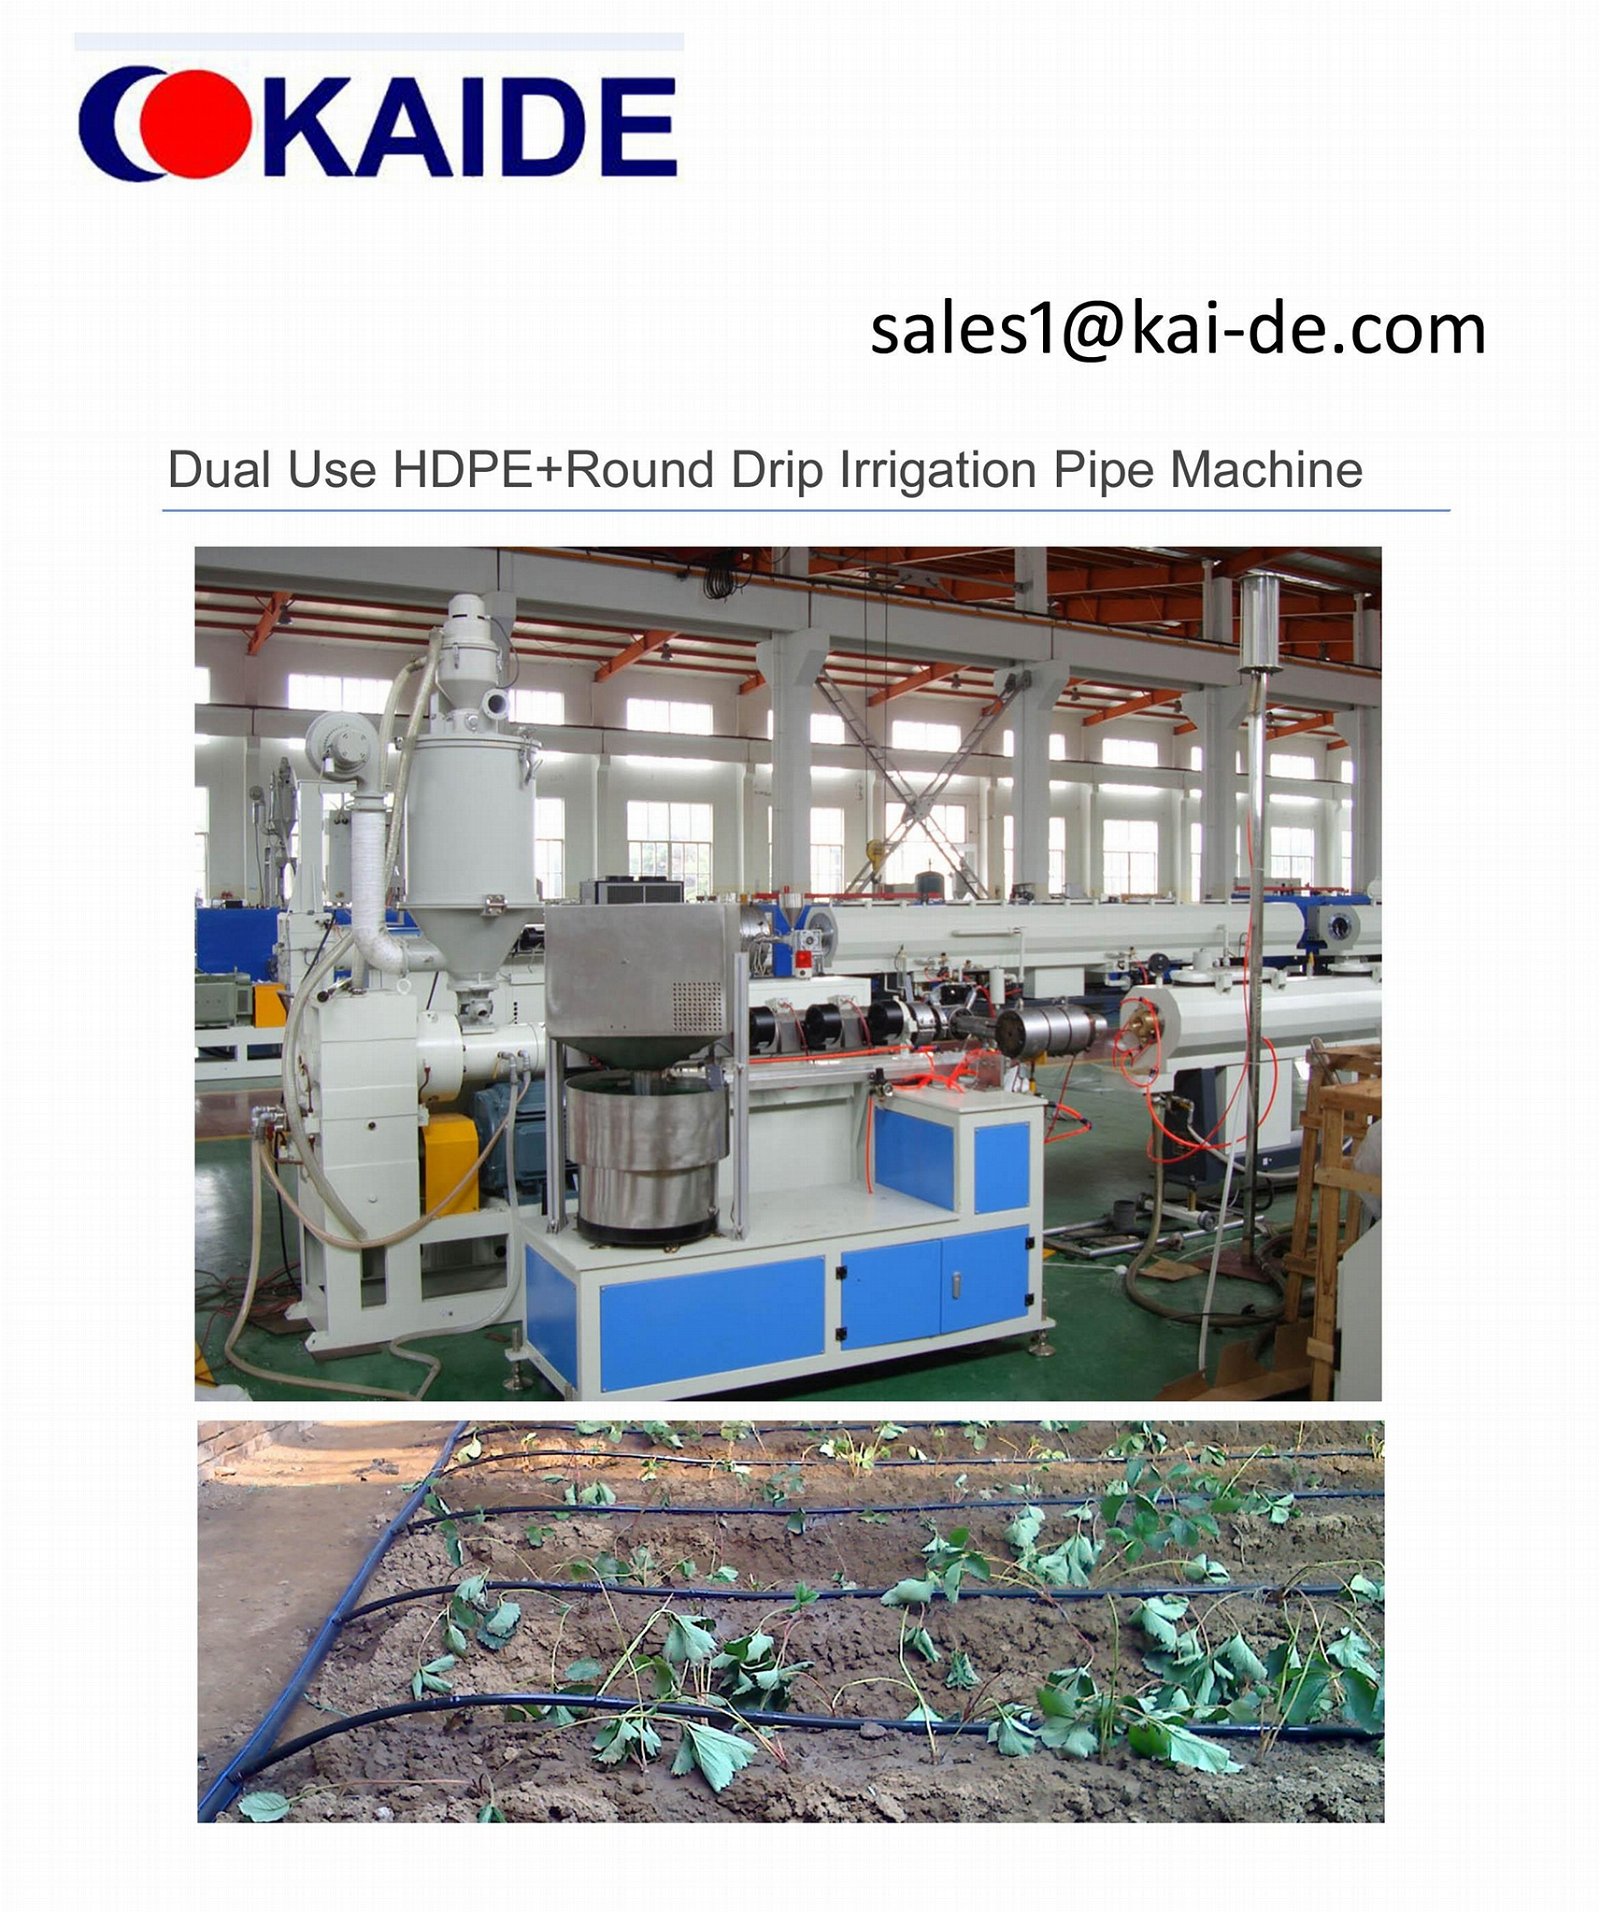 Dual Use HDPE+Round Drip Irrigation Pipe Machine